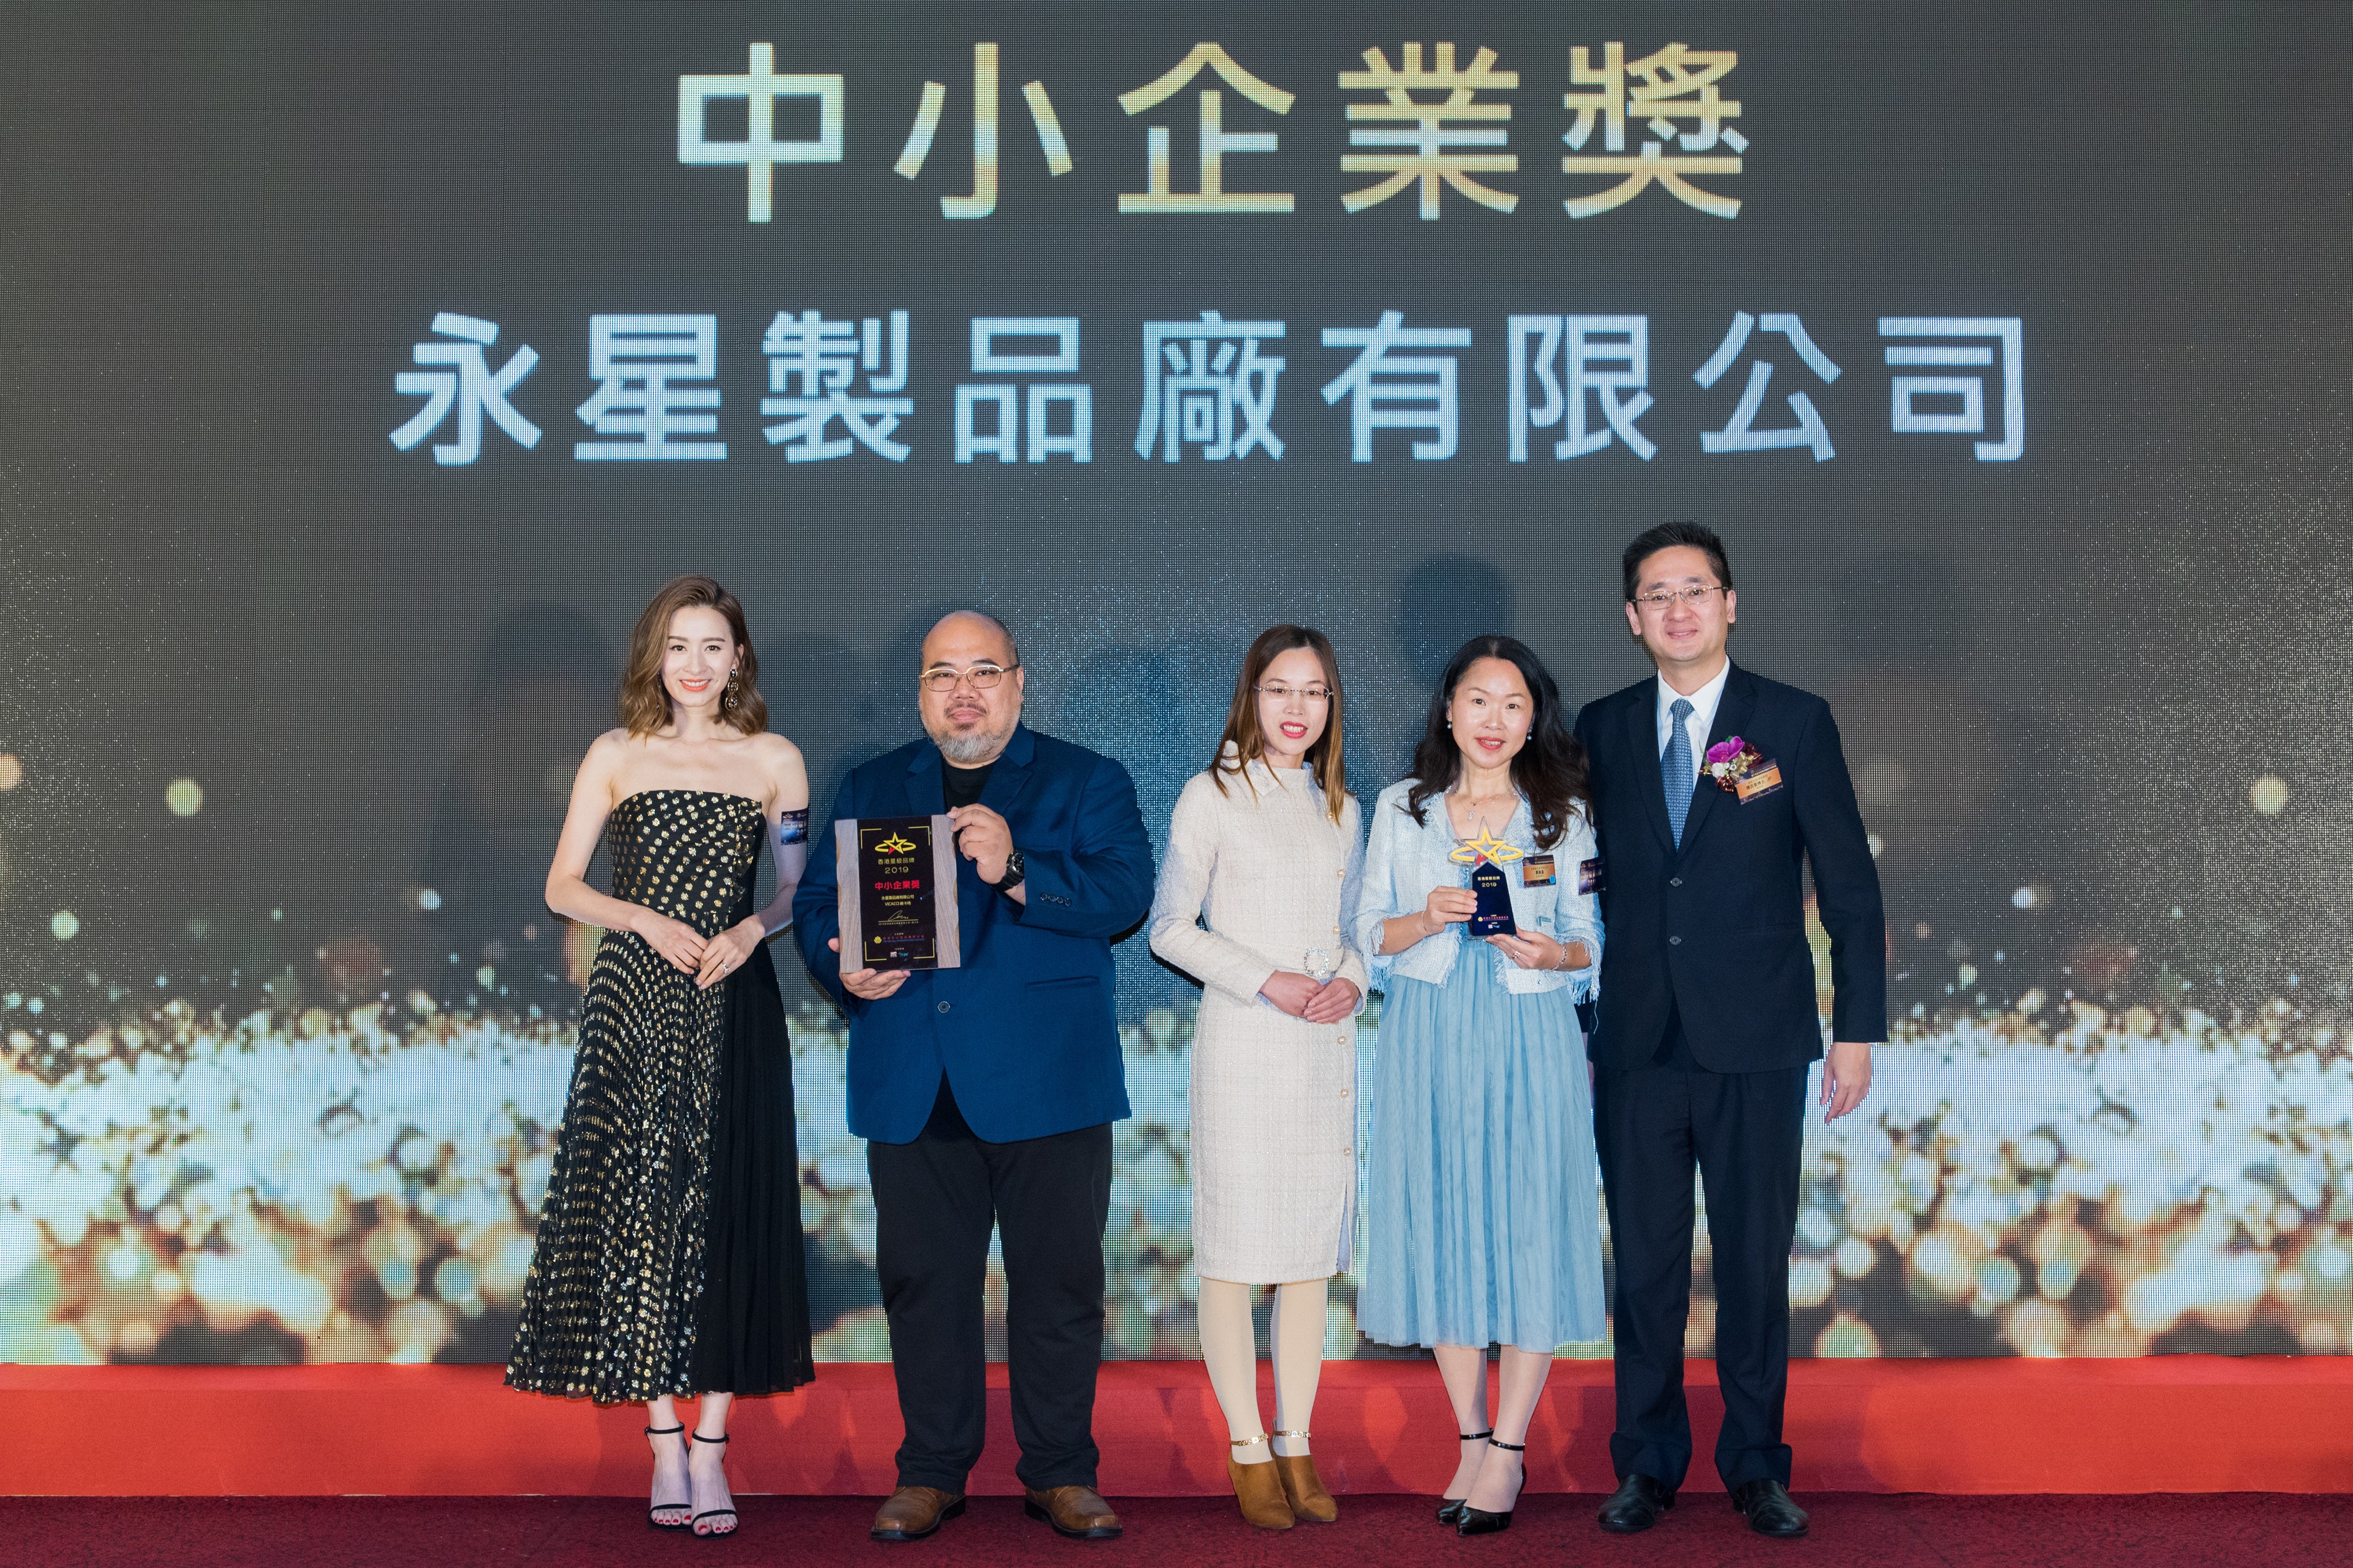 Hong Kong Star Brand 2019 - SME Award